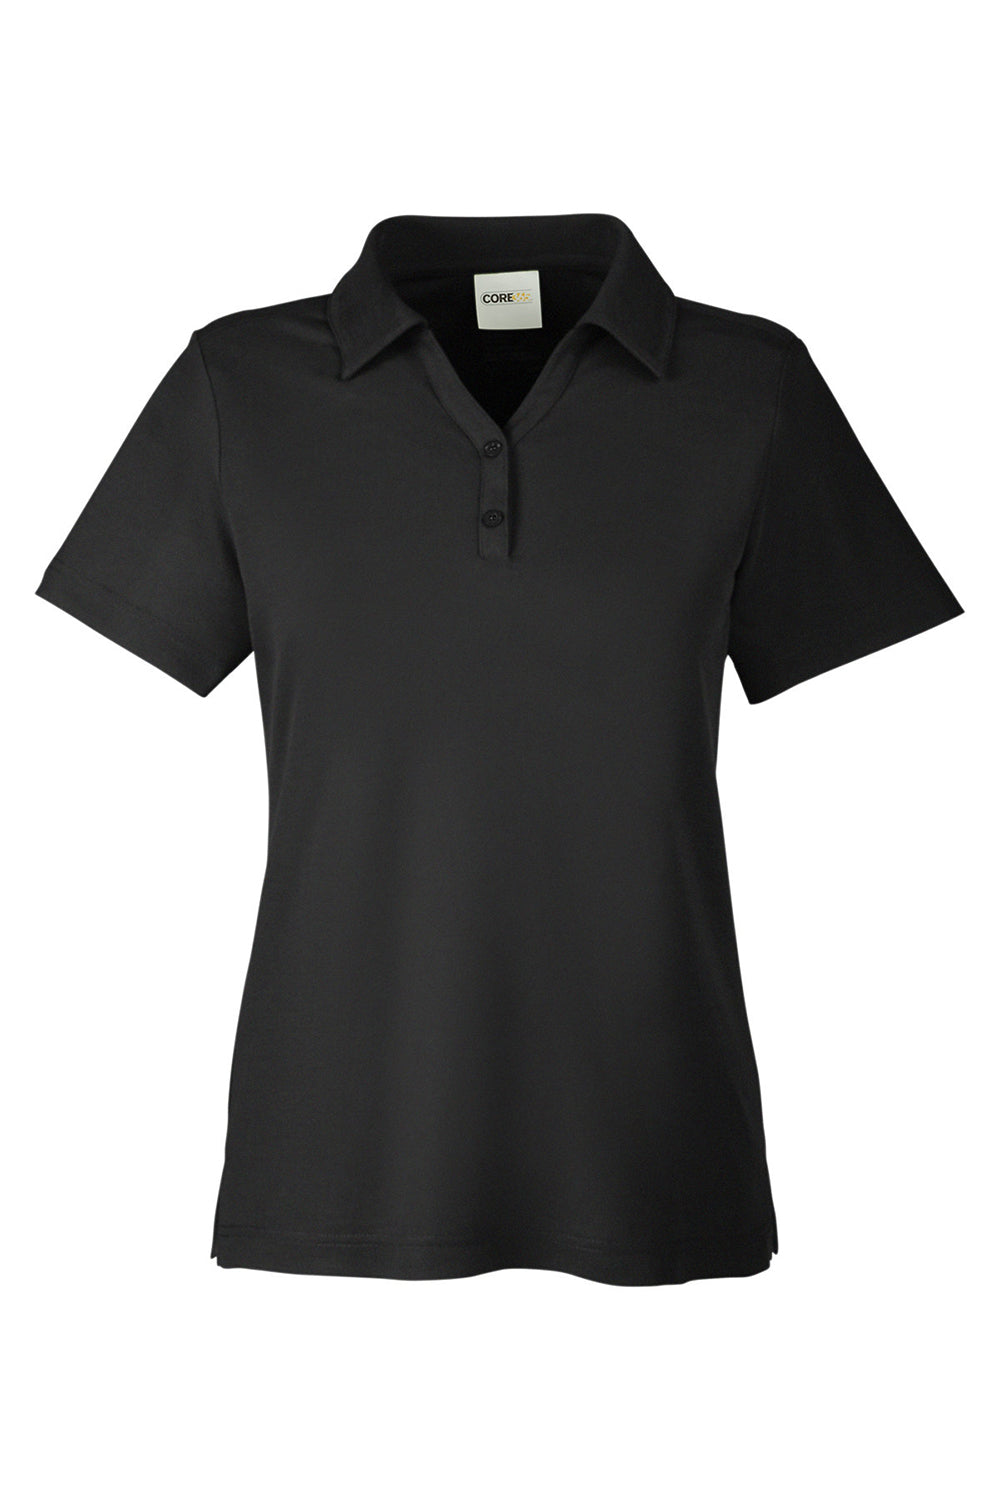 Core 365 CE112W Womens Fusion ChromaSoft Performance Moisture Wicking Pique Short Sleeve Polo Shirt Black Flat Front